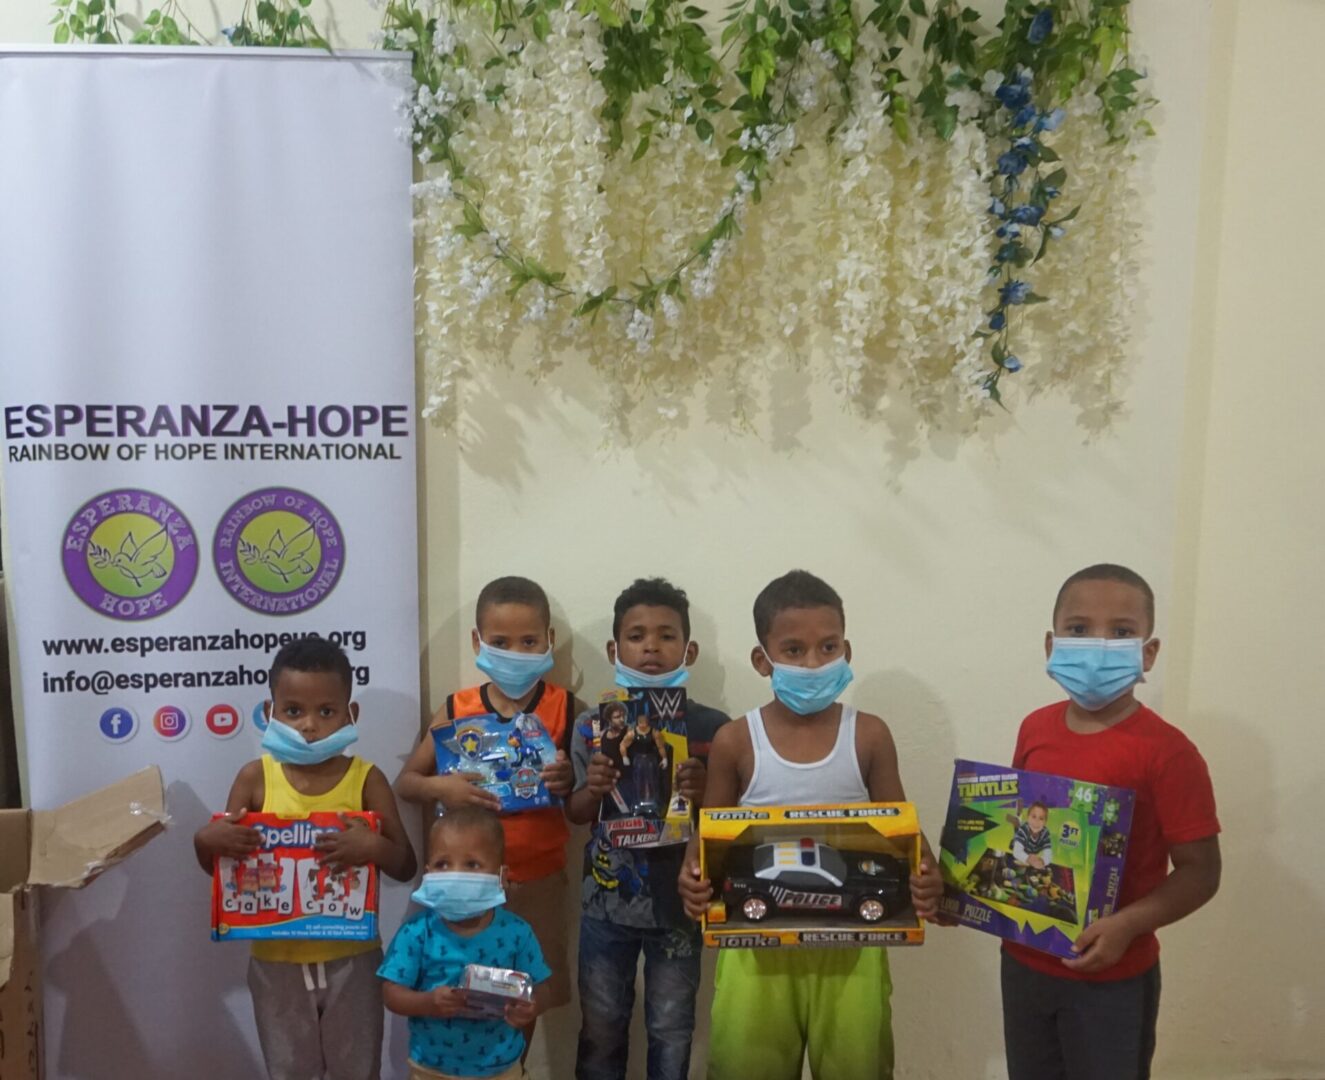 Six young boys holding toys beside the Esperanza-Hope tarpaulin